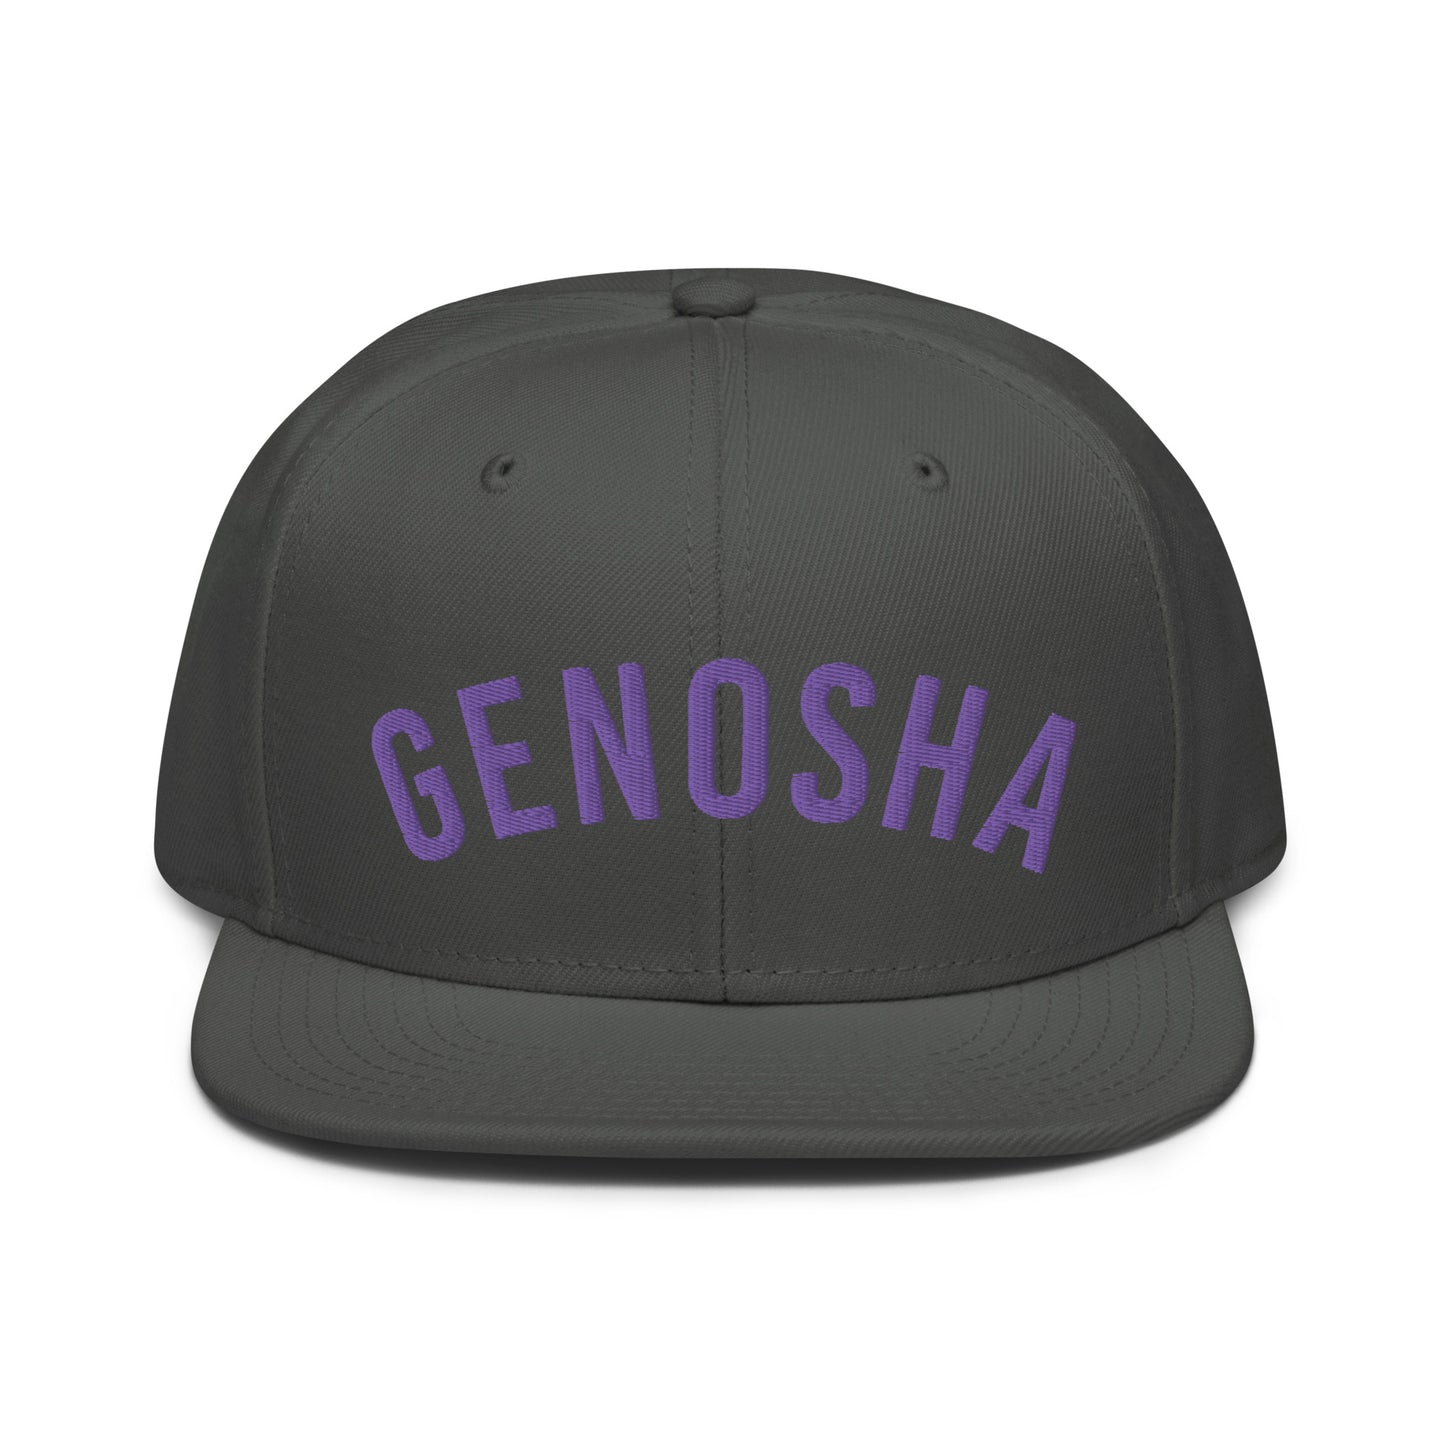 Genosha Home Team snapback hat